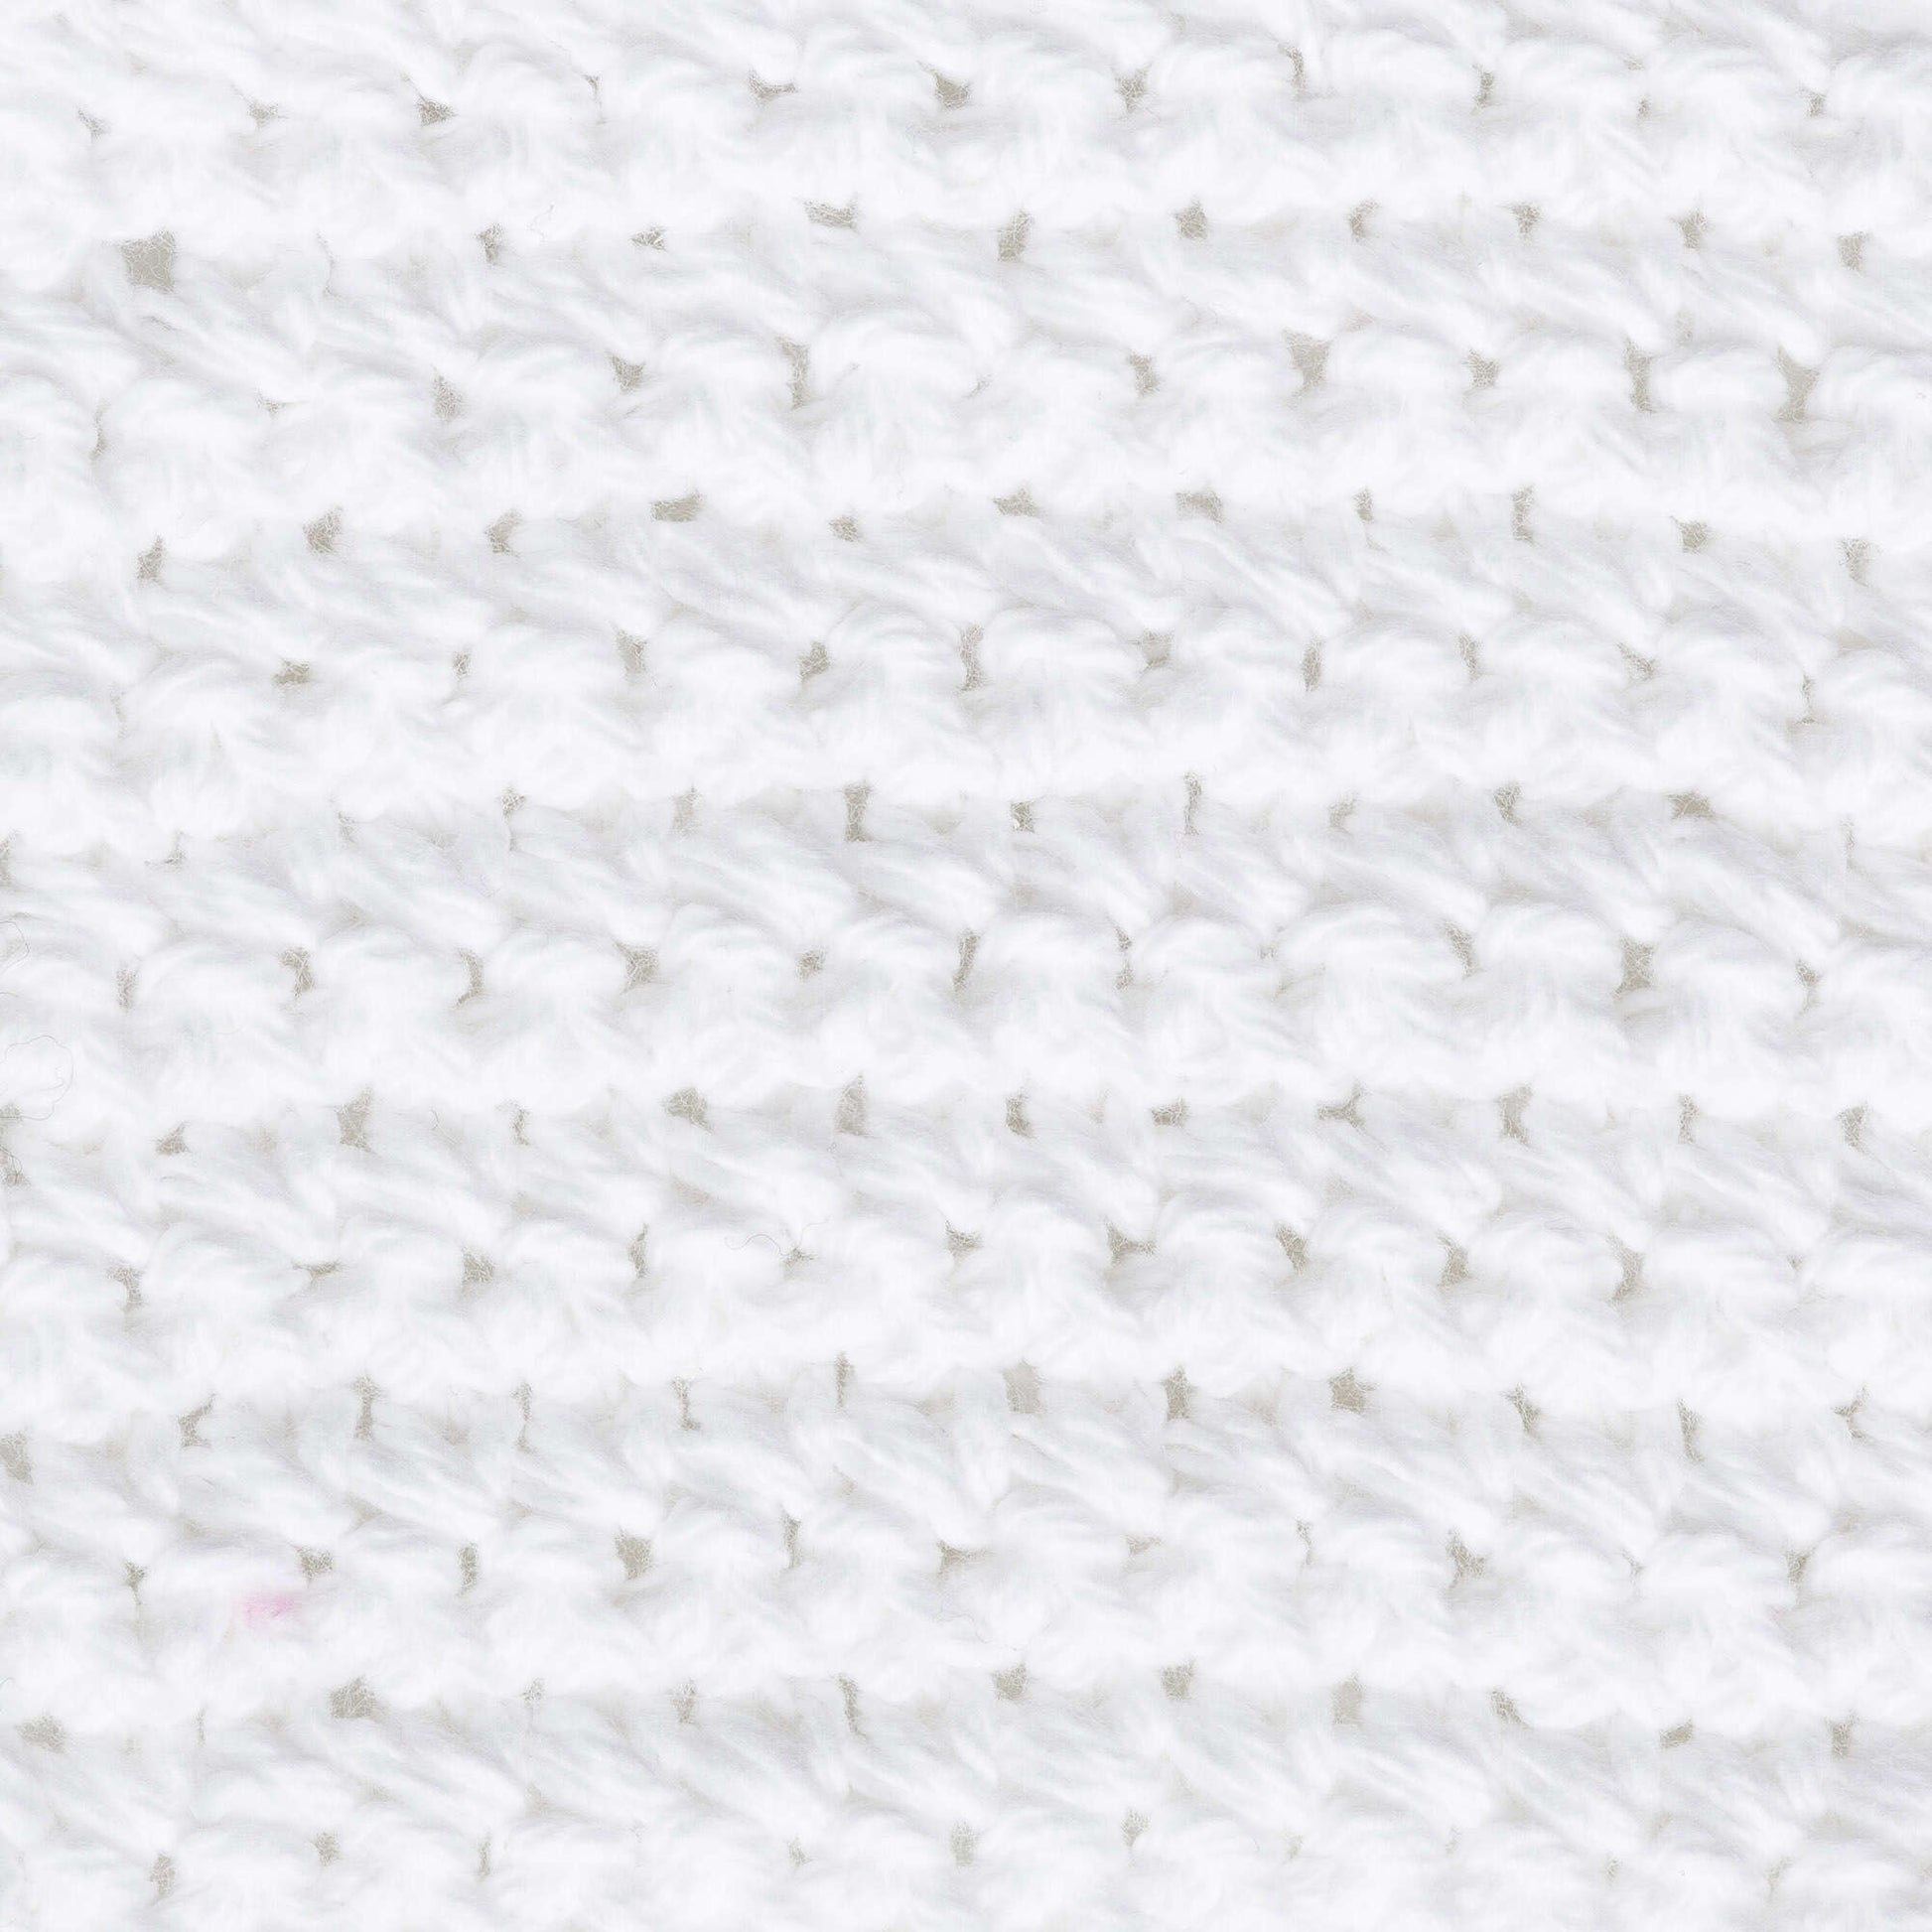 Bernat Handicrafter Cotton Yarn - Stripes-Country, 1 count - Harris Teeter